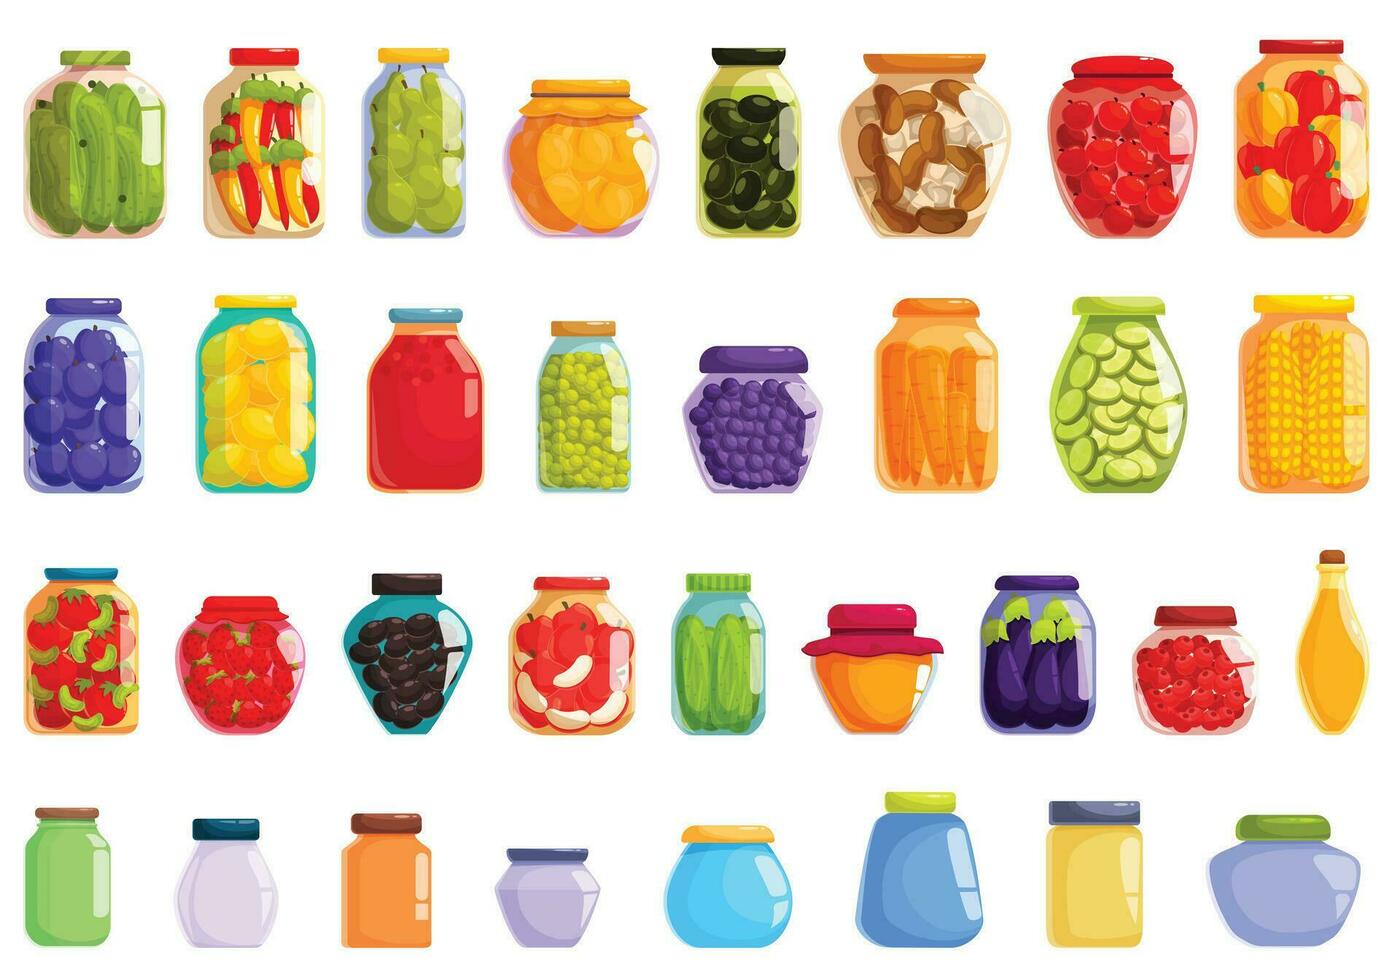 en escabeche comida frascos íconos conjunto dibujos animados vector. producto lata vector